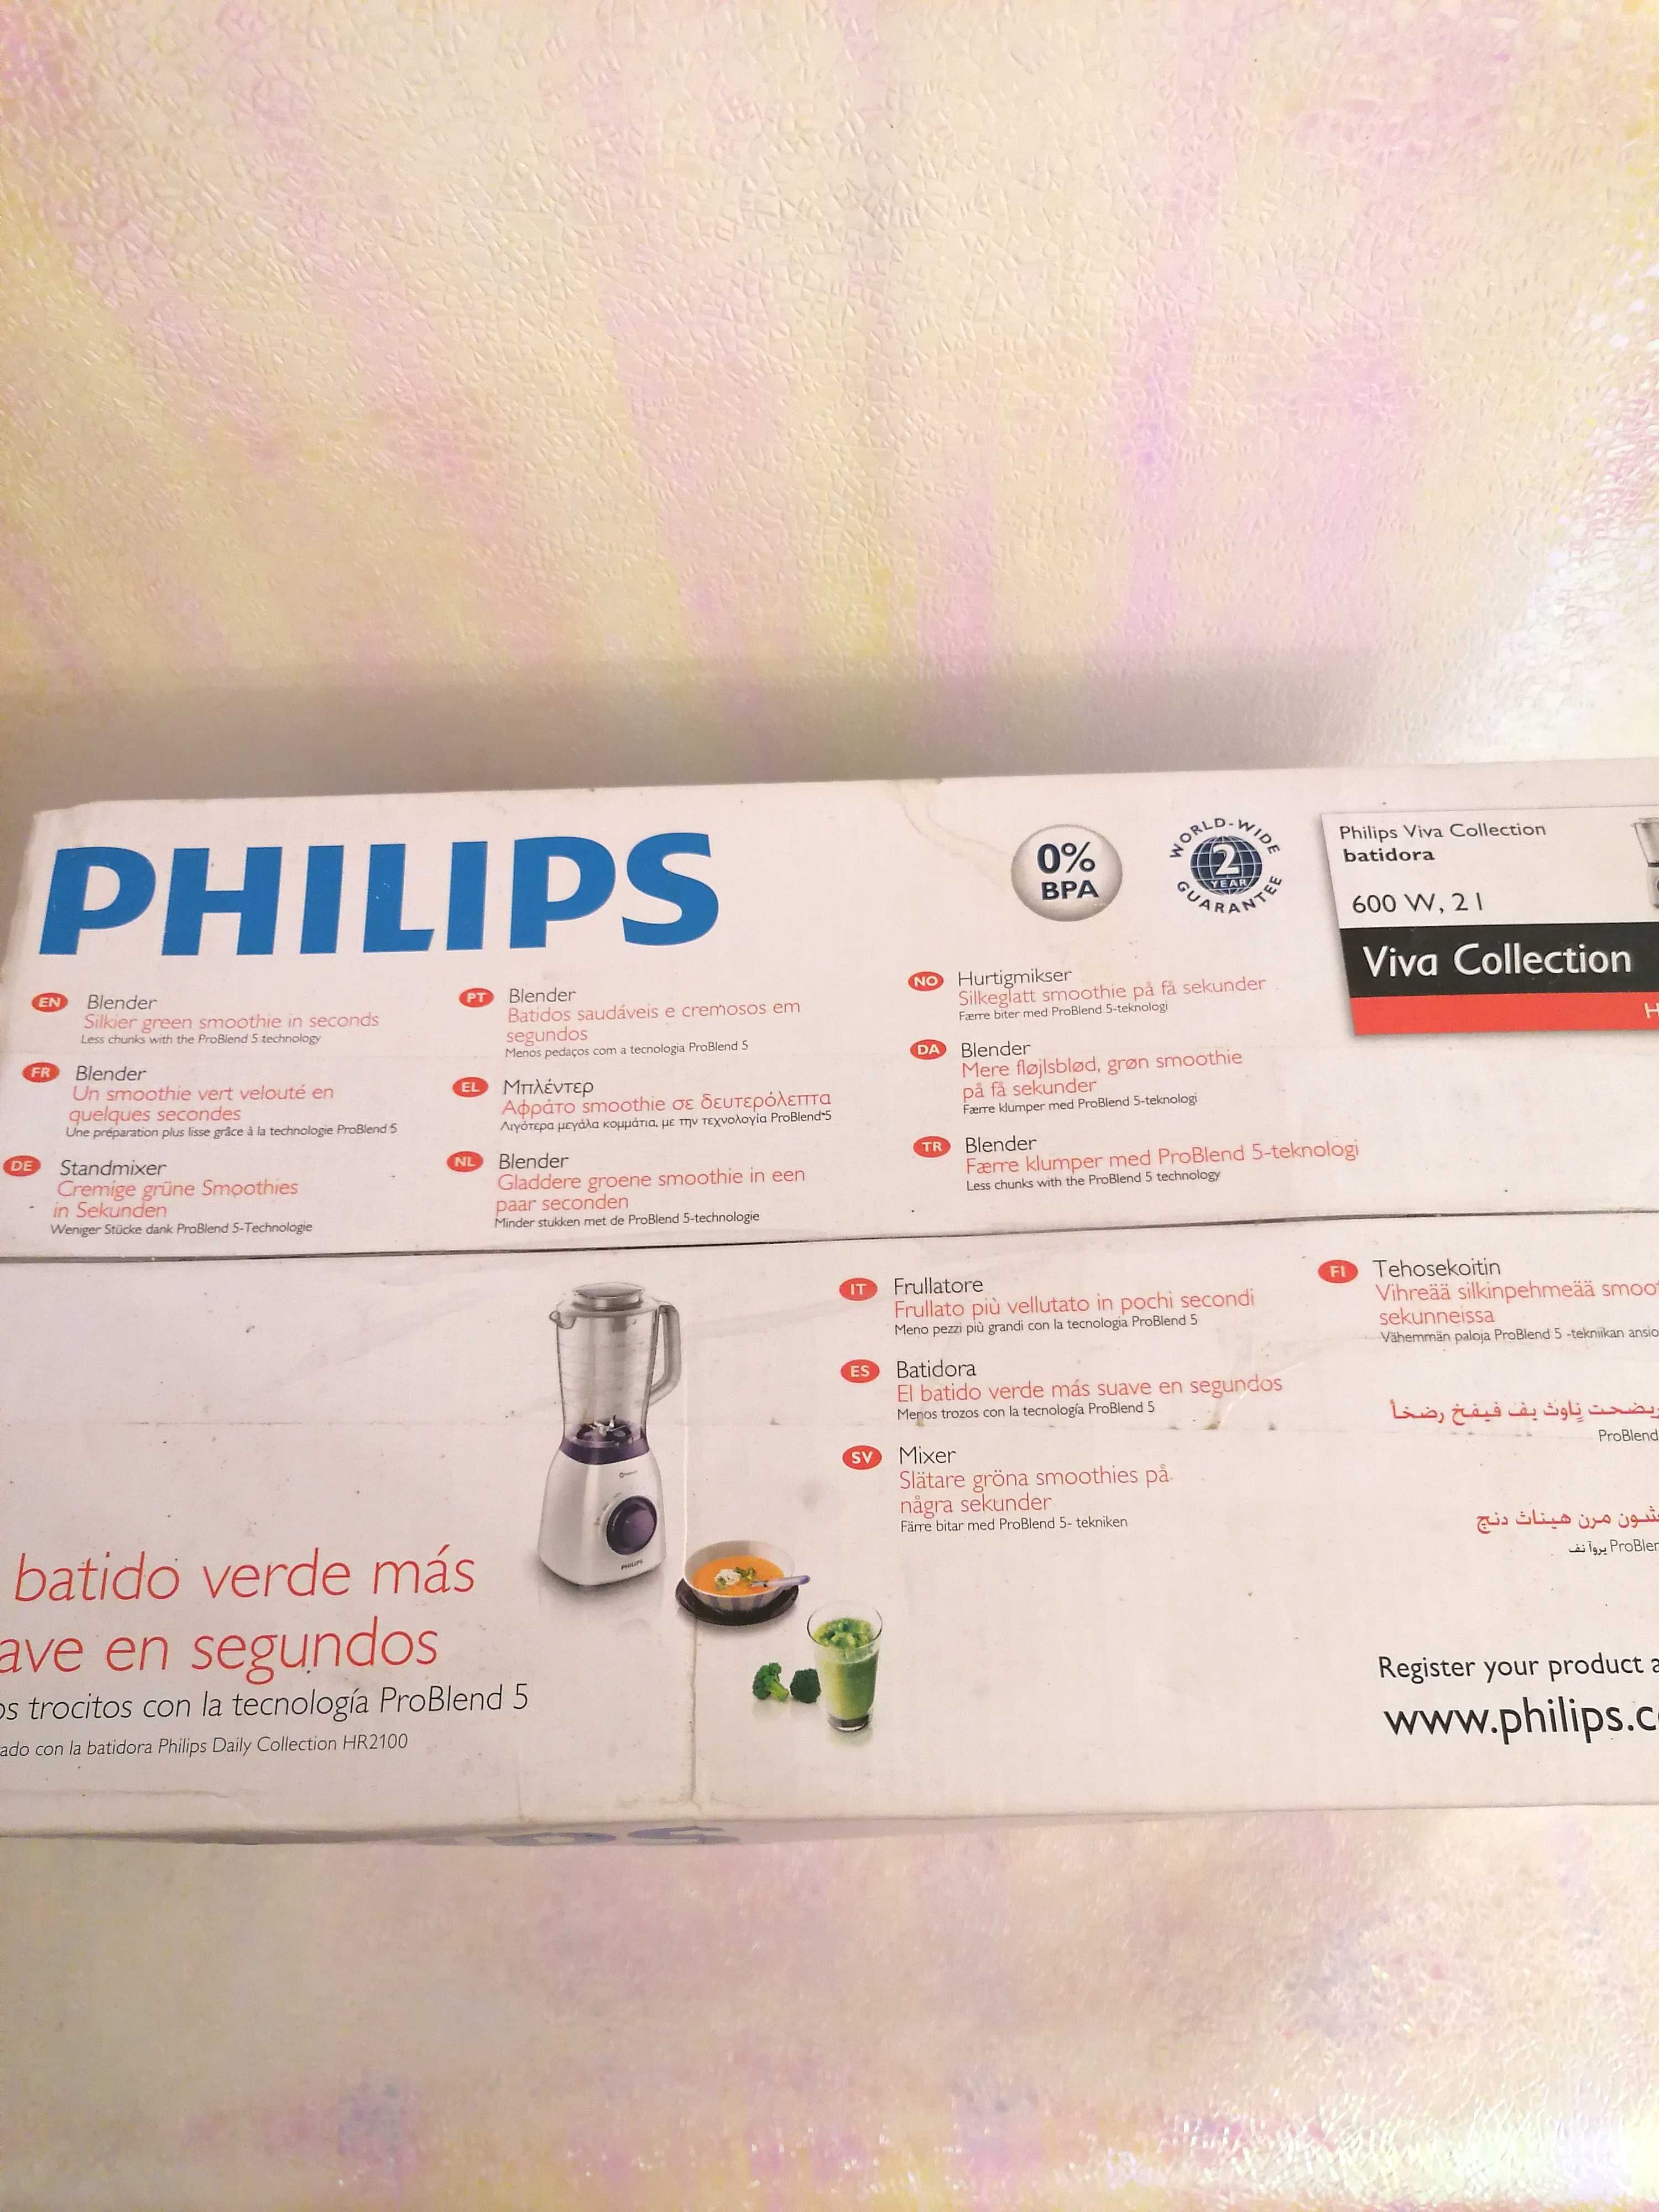 Liquidificadora Philips Pro Blend 5 HR2162 NOVA